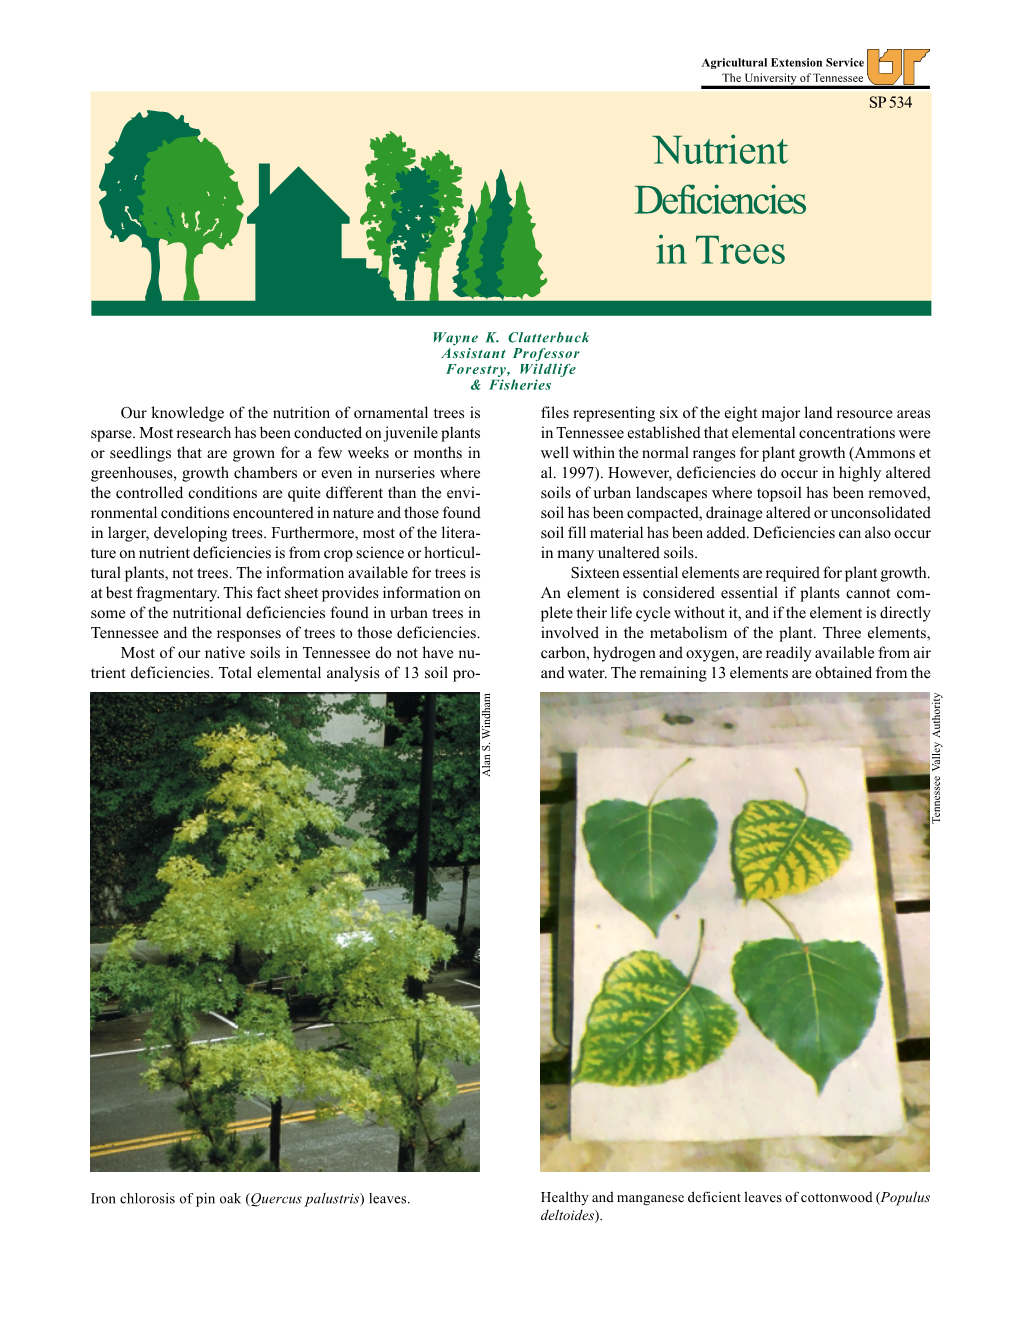 Nutrient Deficiencies in Trees